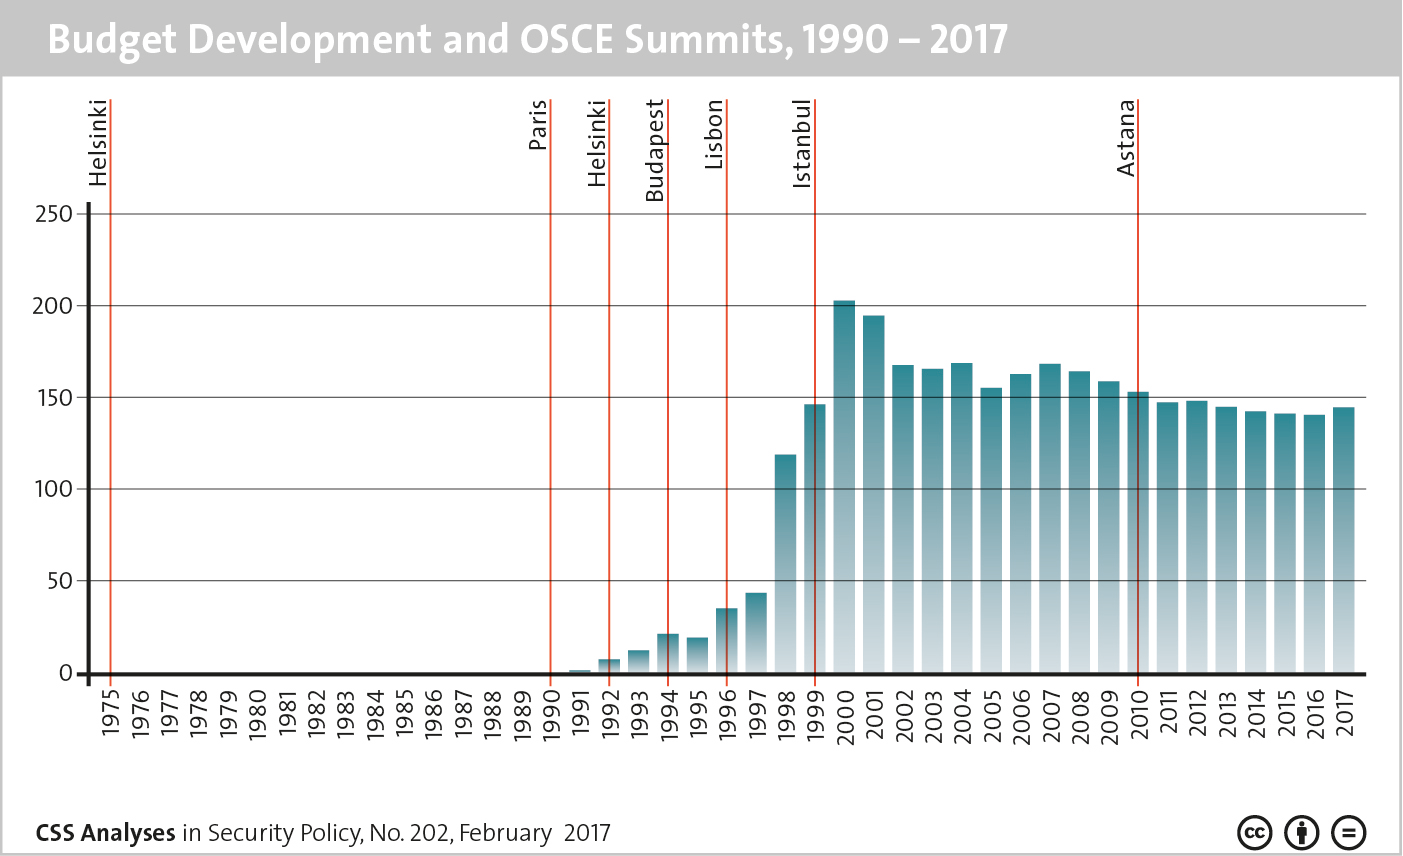 Budget Development and OSCE Summits